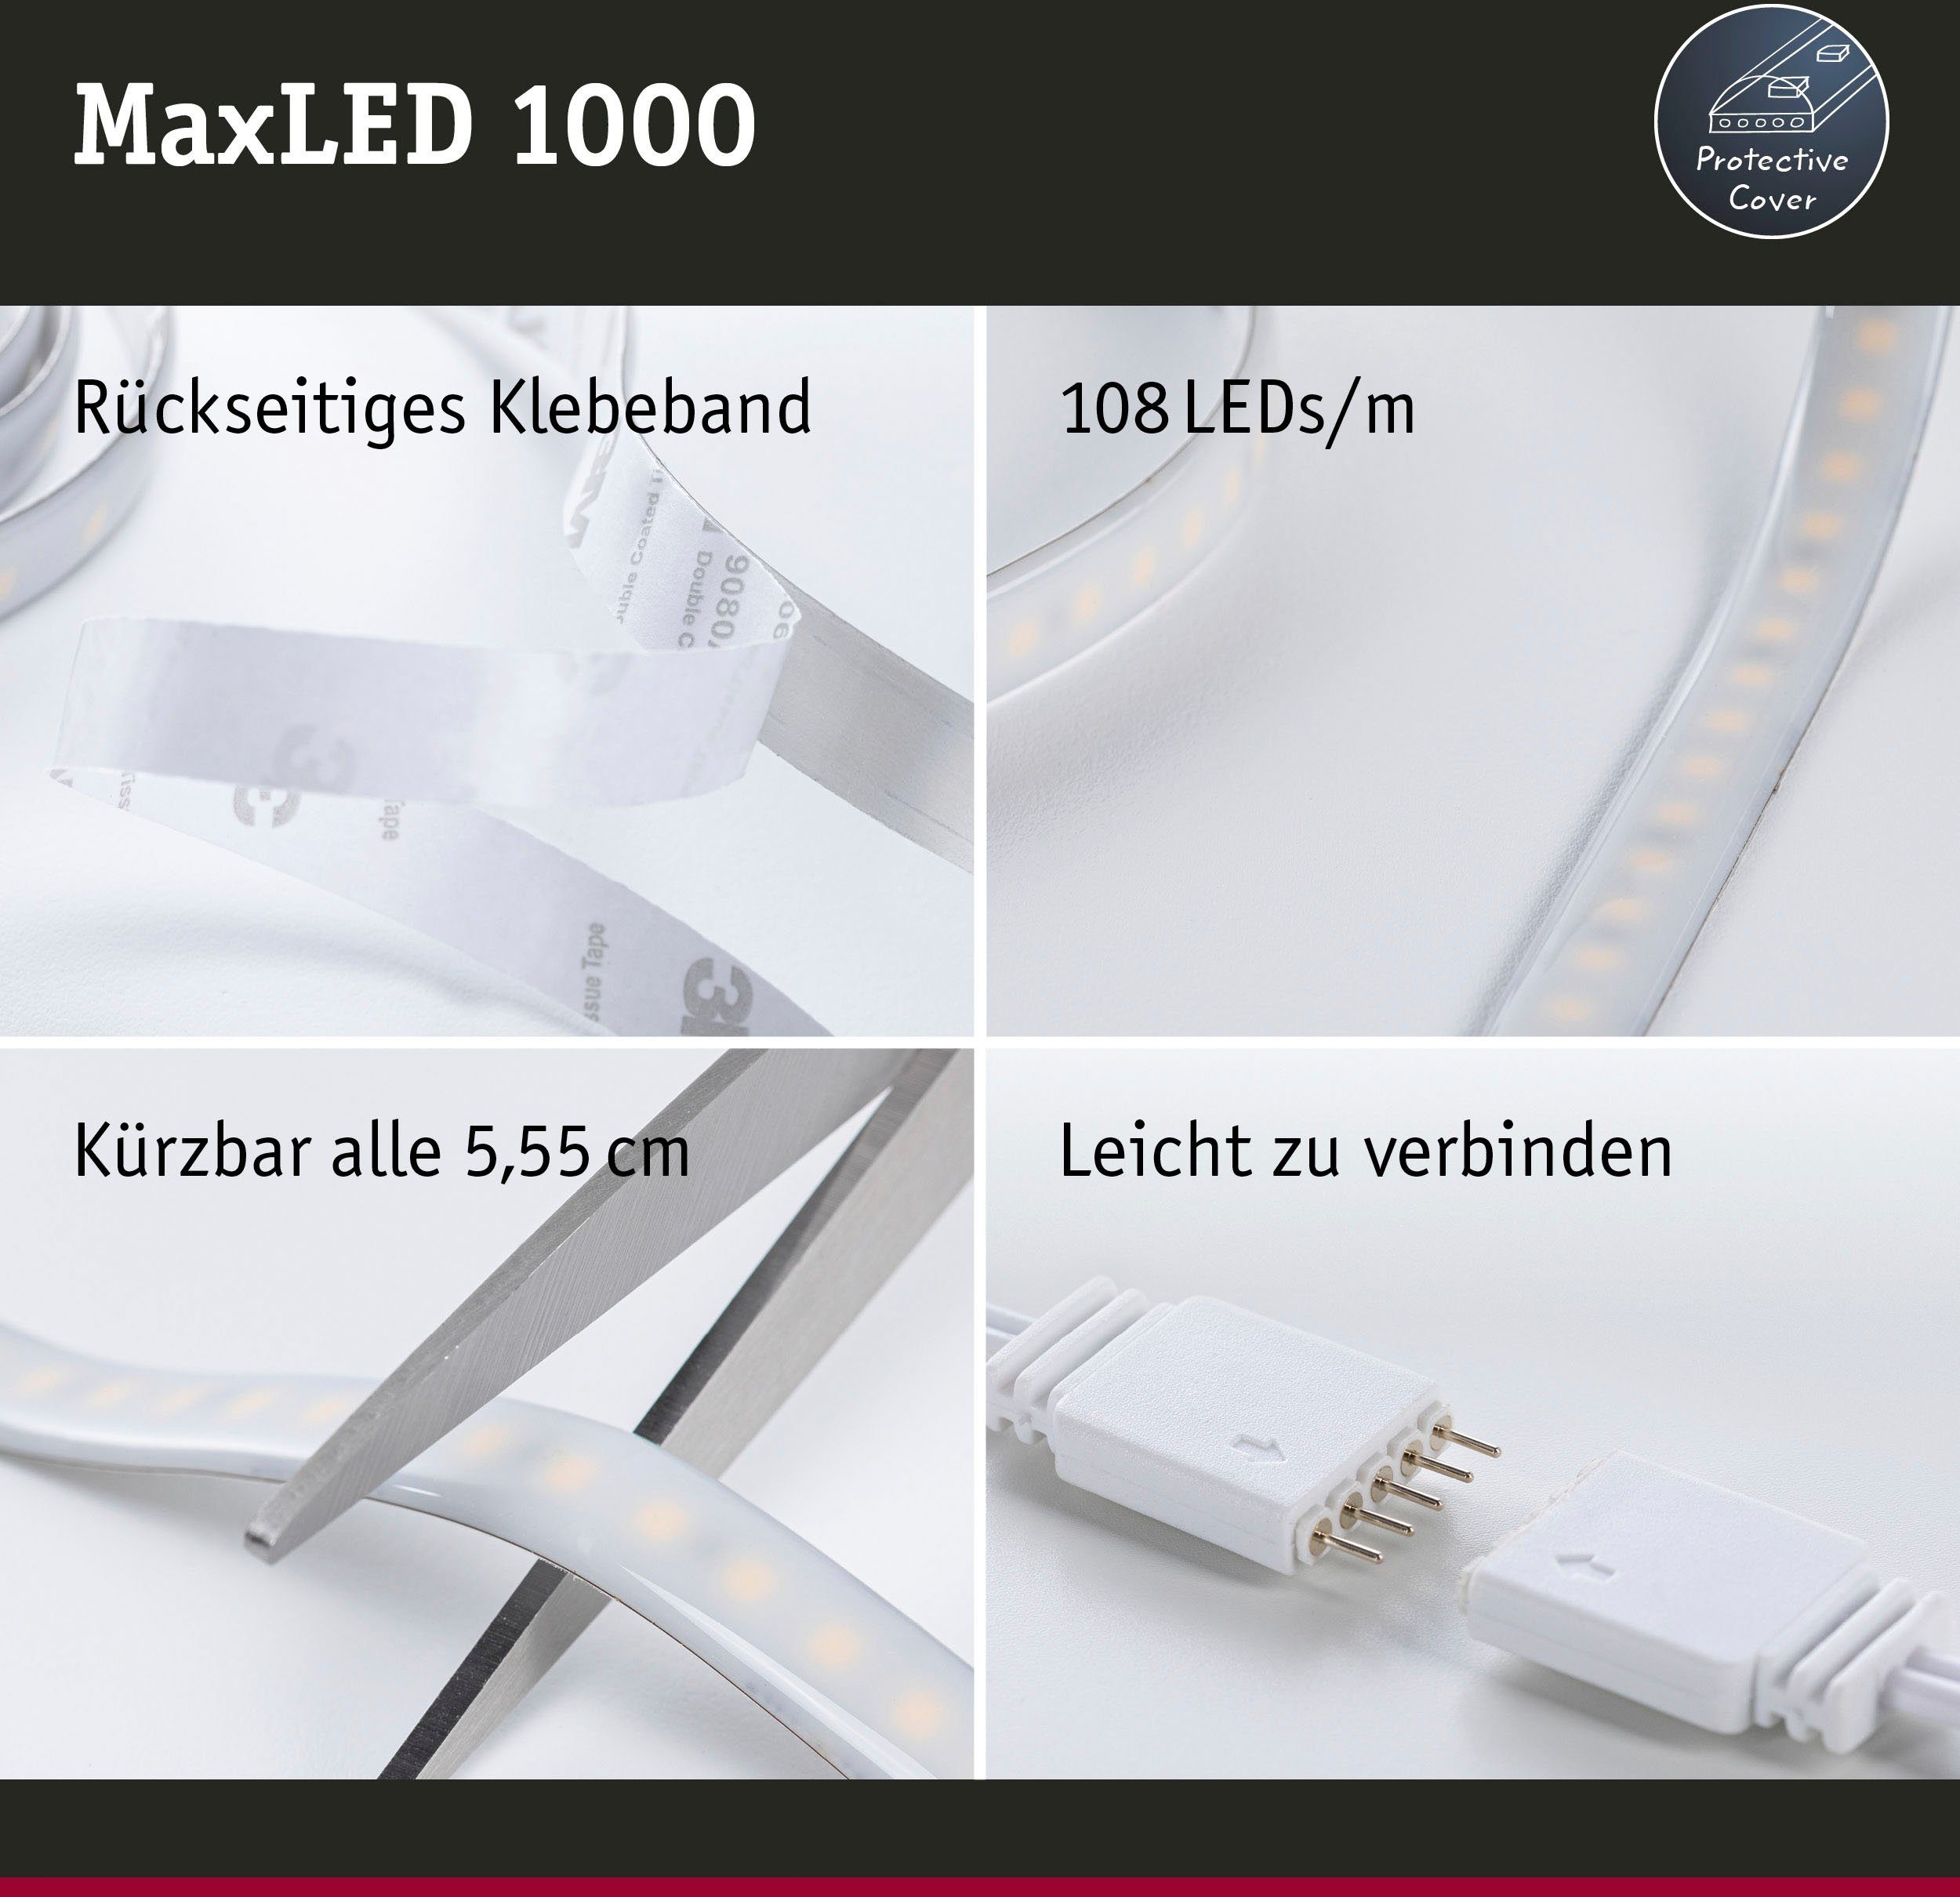 Paulmann LED-Streifen MaxLED 1000 Stripe 2,5m IP44 White Cover 1-flammig, 24V 27W Silber, 2700-6500K Tunable